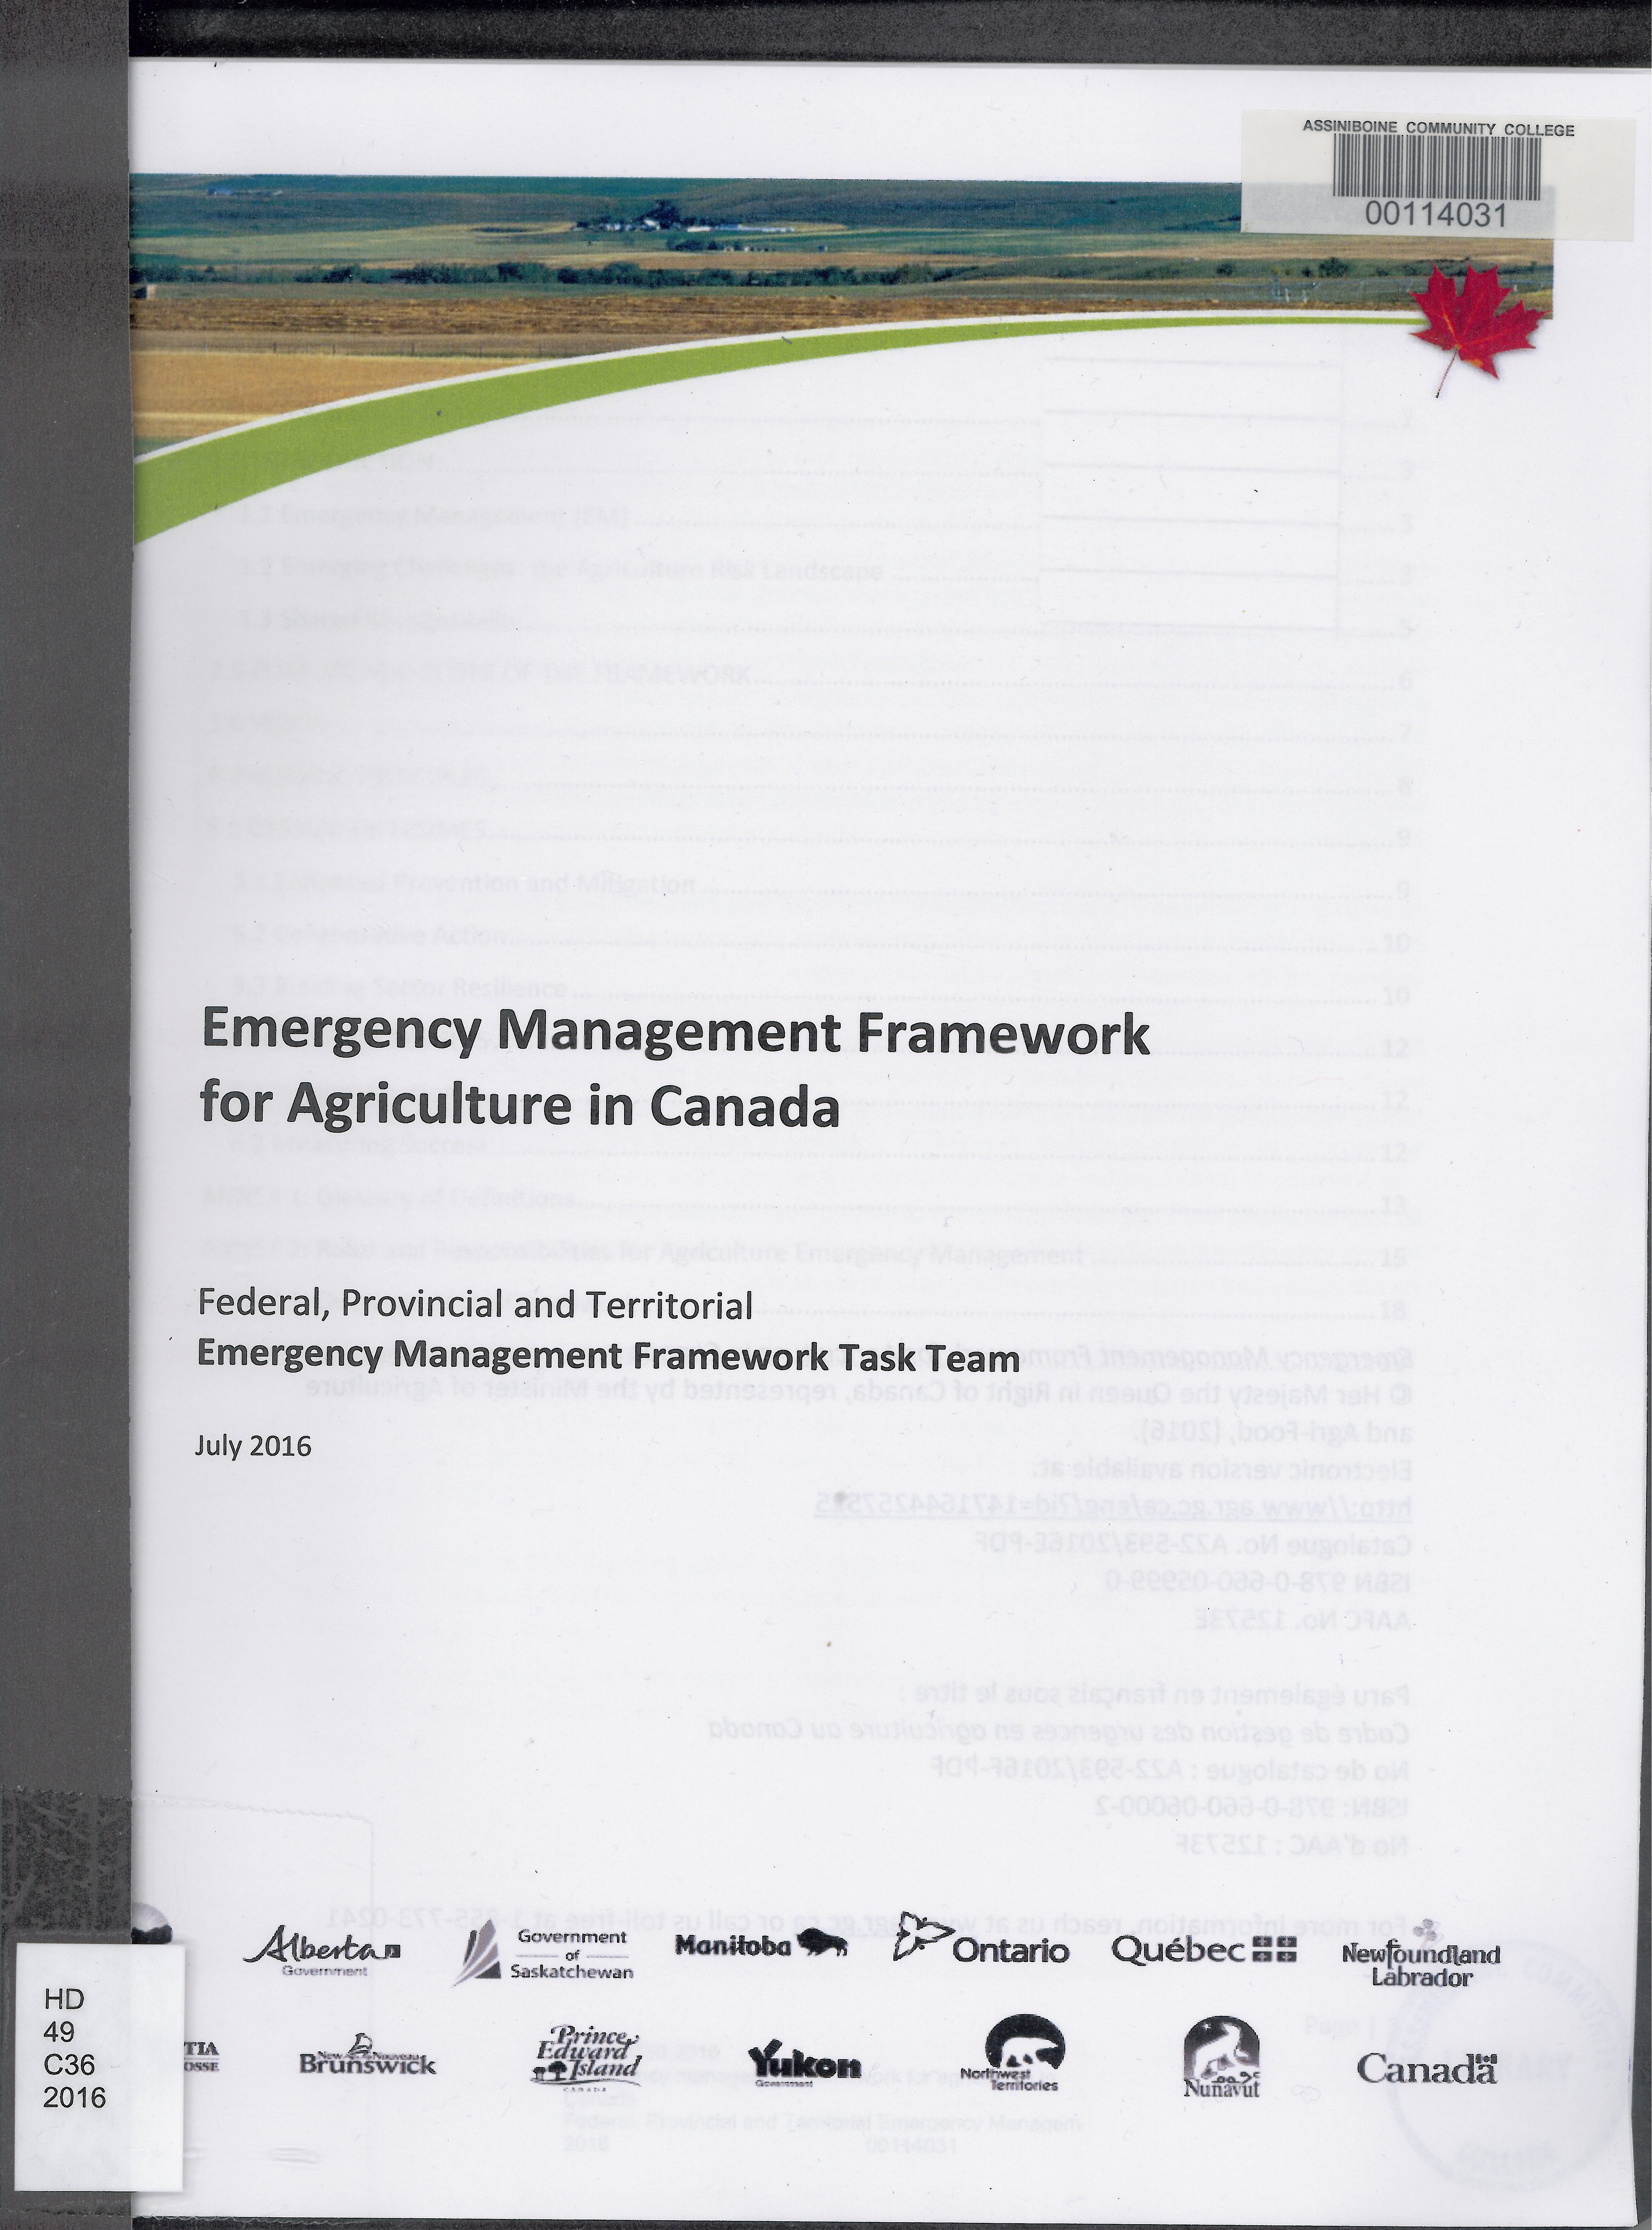 Emergency management framework for agriculture in Canada